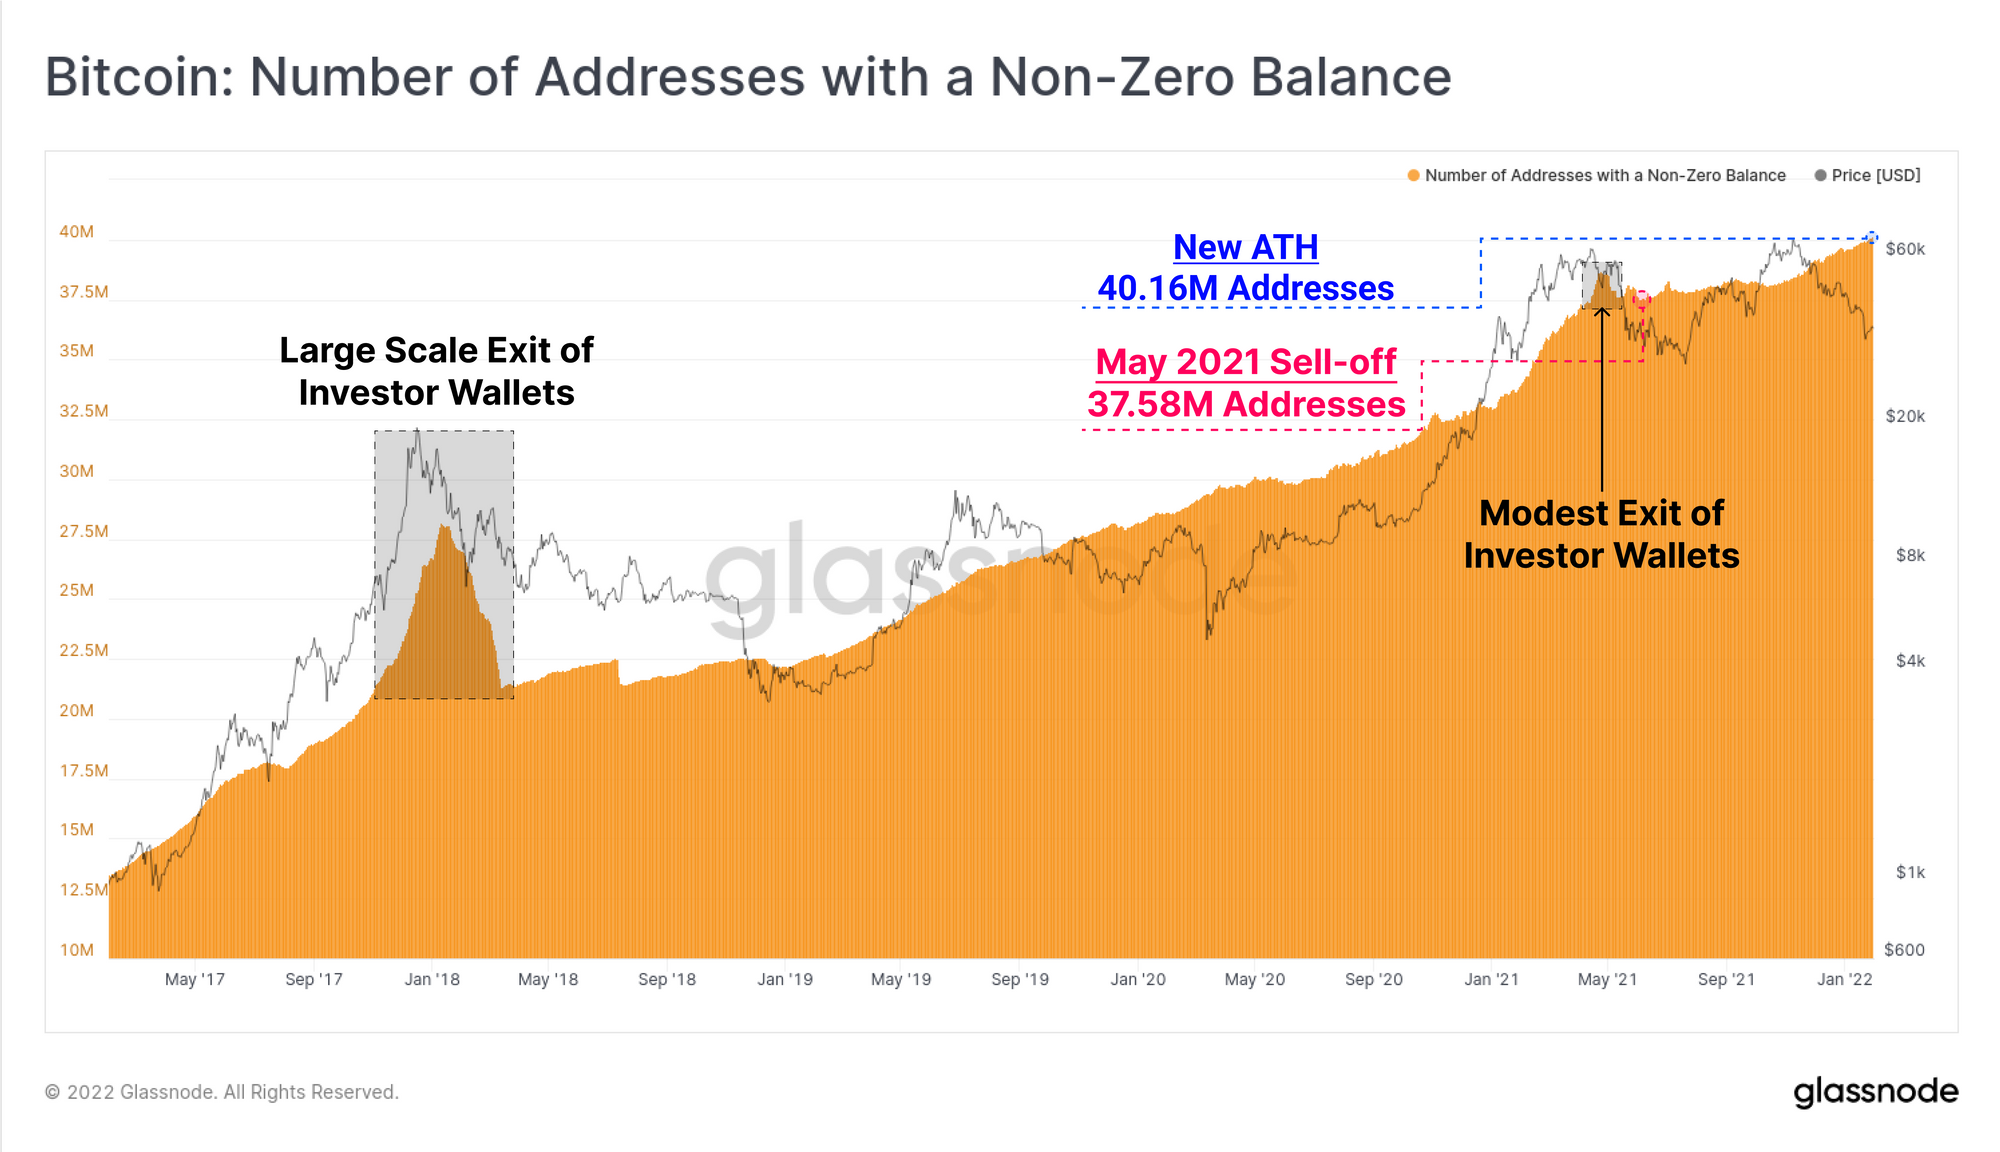 Bitcoin Addresses With Non-Zero Balance